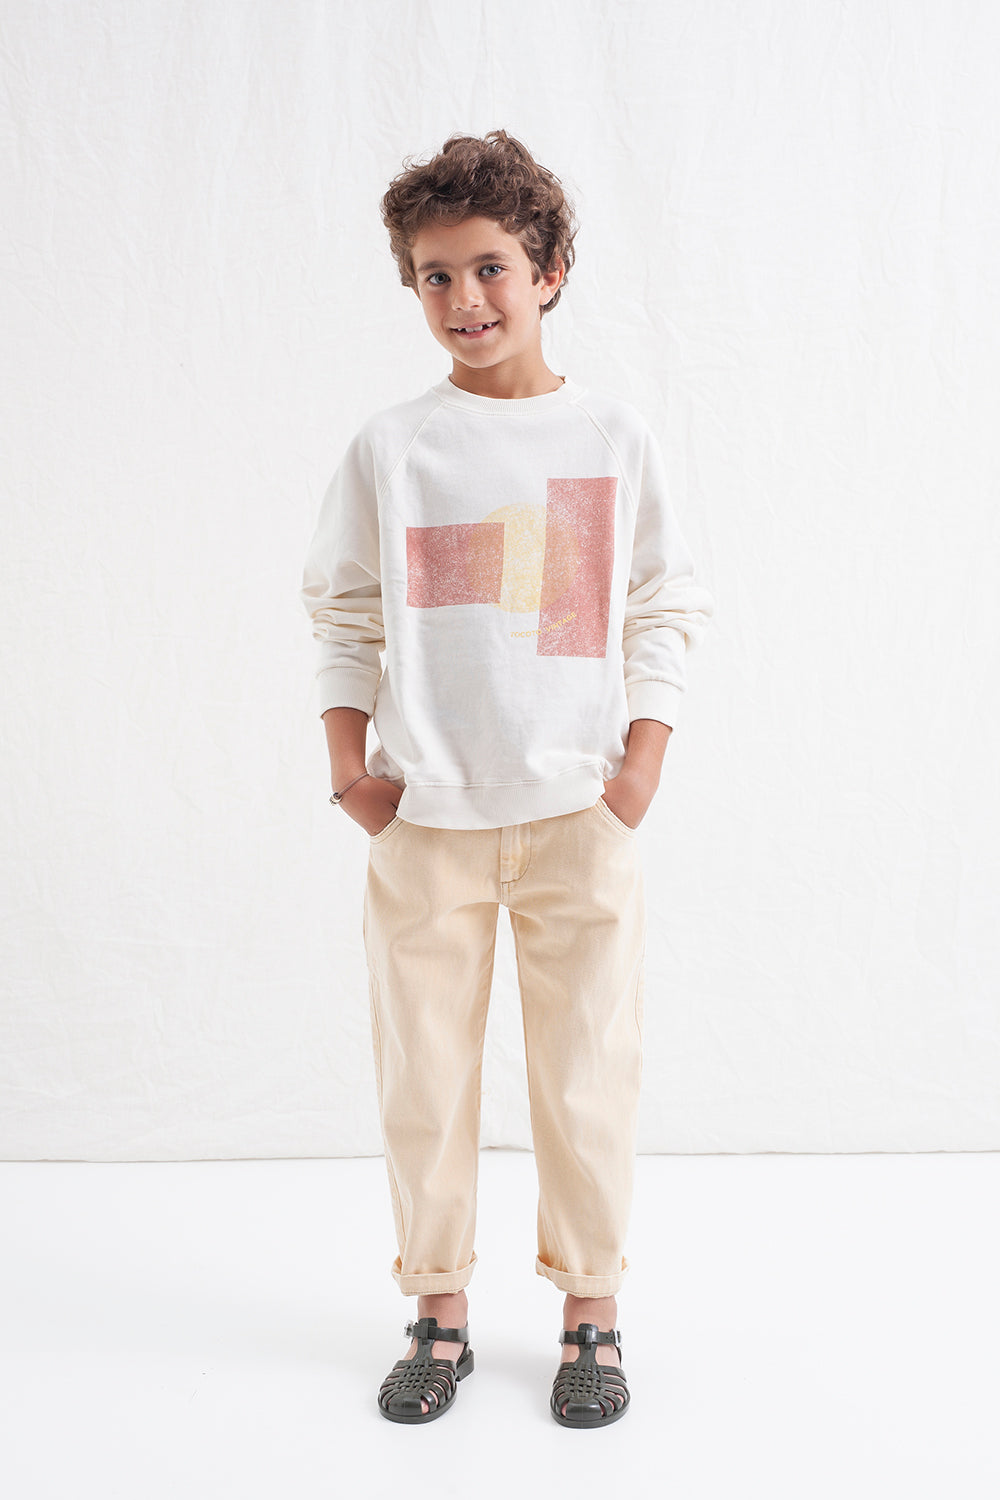 Tocoto Vintage - kid sunshine sunsets sweatshirt - off white